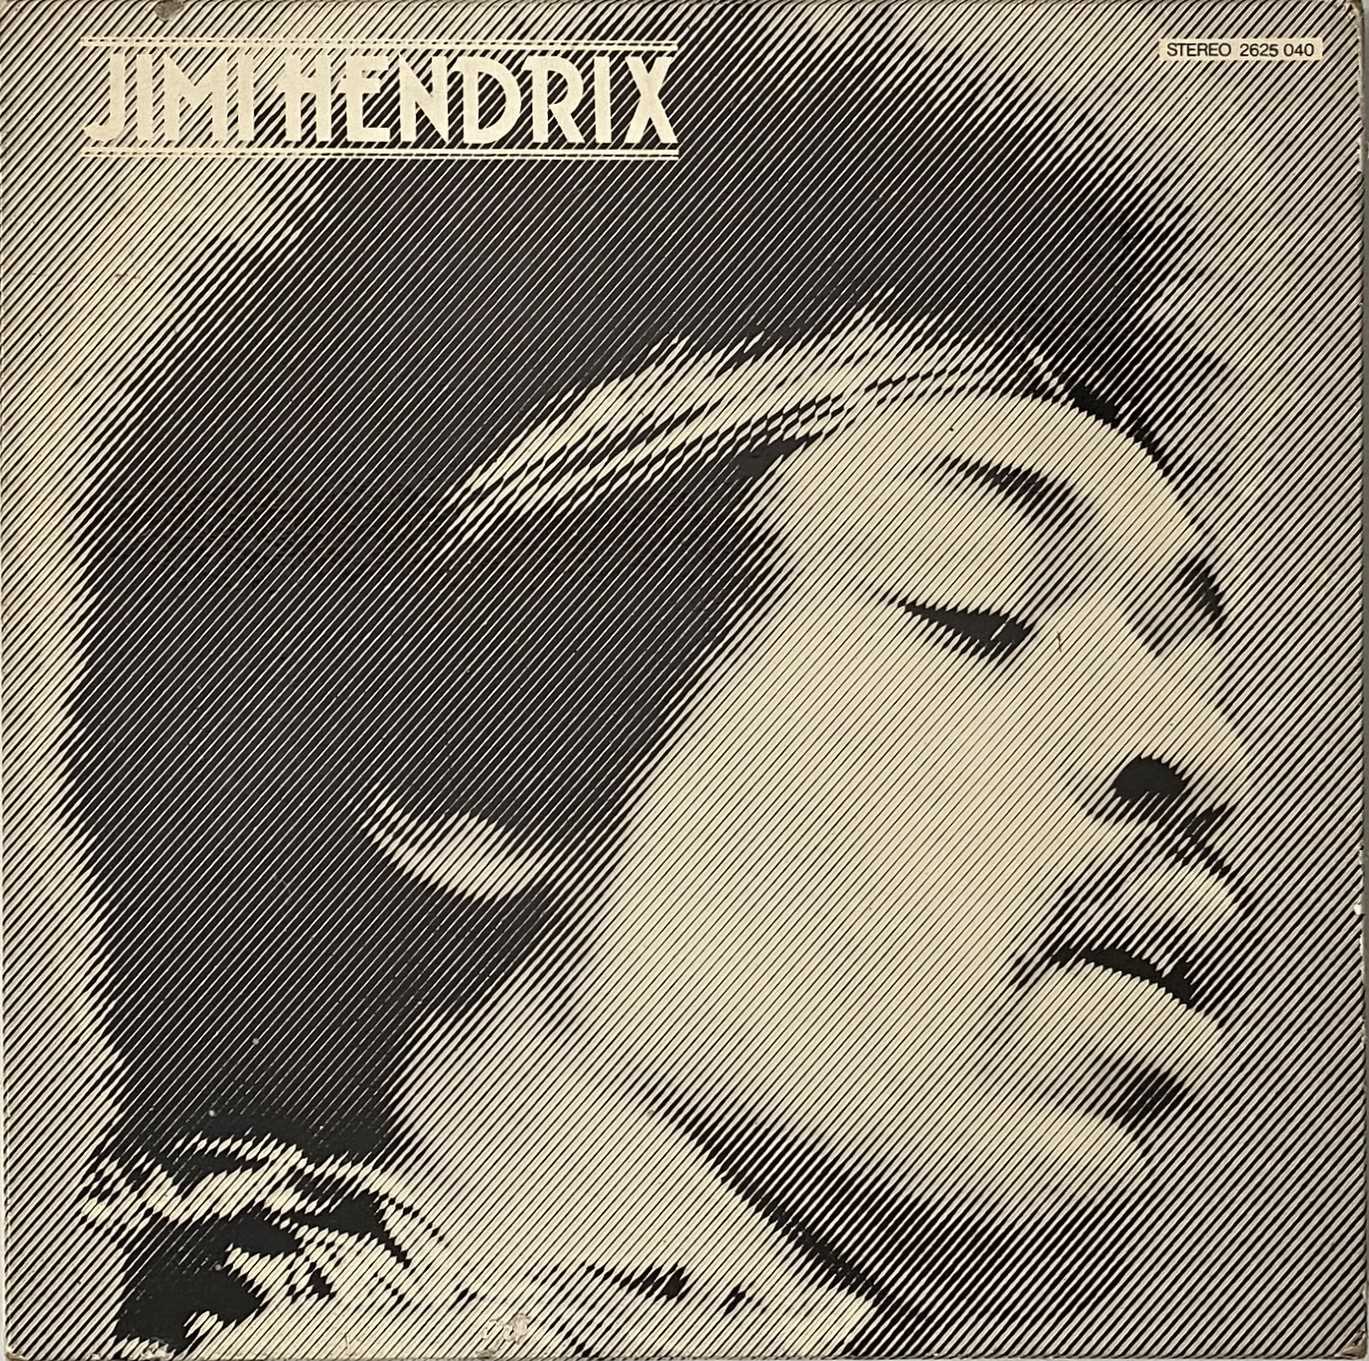 JIMI HENDRIX - JIMI HENDRIX (12 x LP BOX SET - POLYDOR 2625 040)